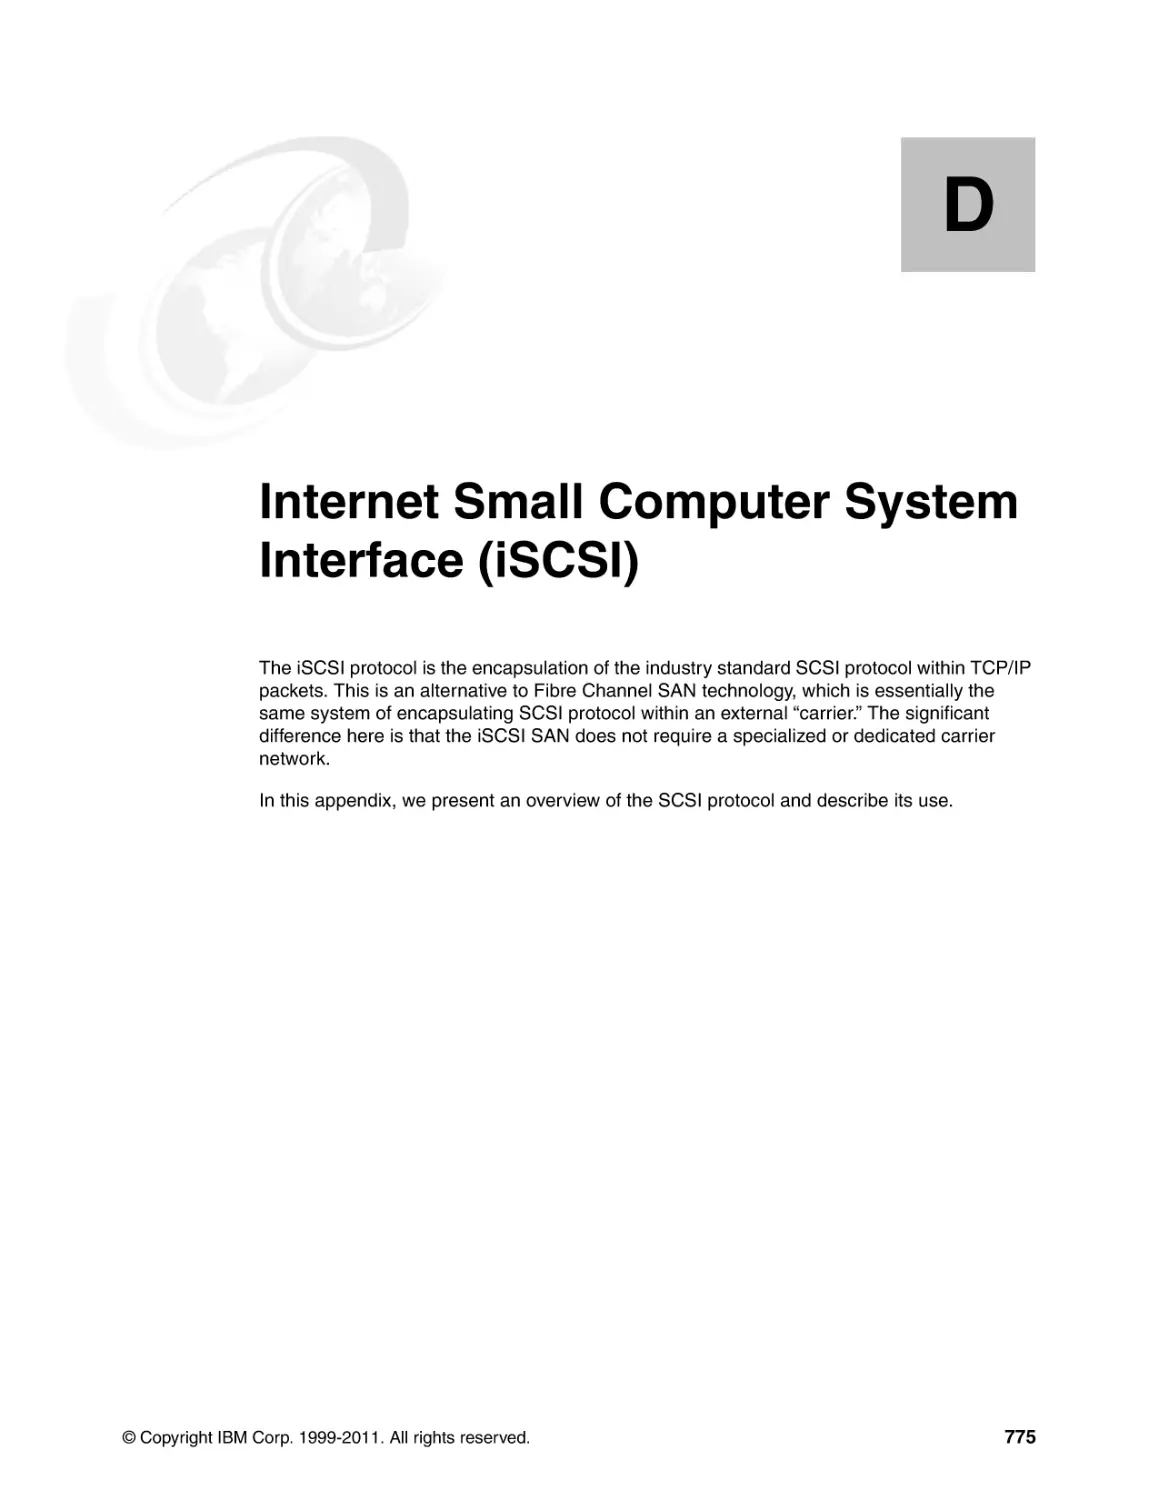 Appendix D. Internet Small Computer System Interface (iSCSI)